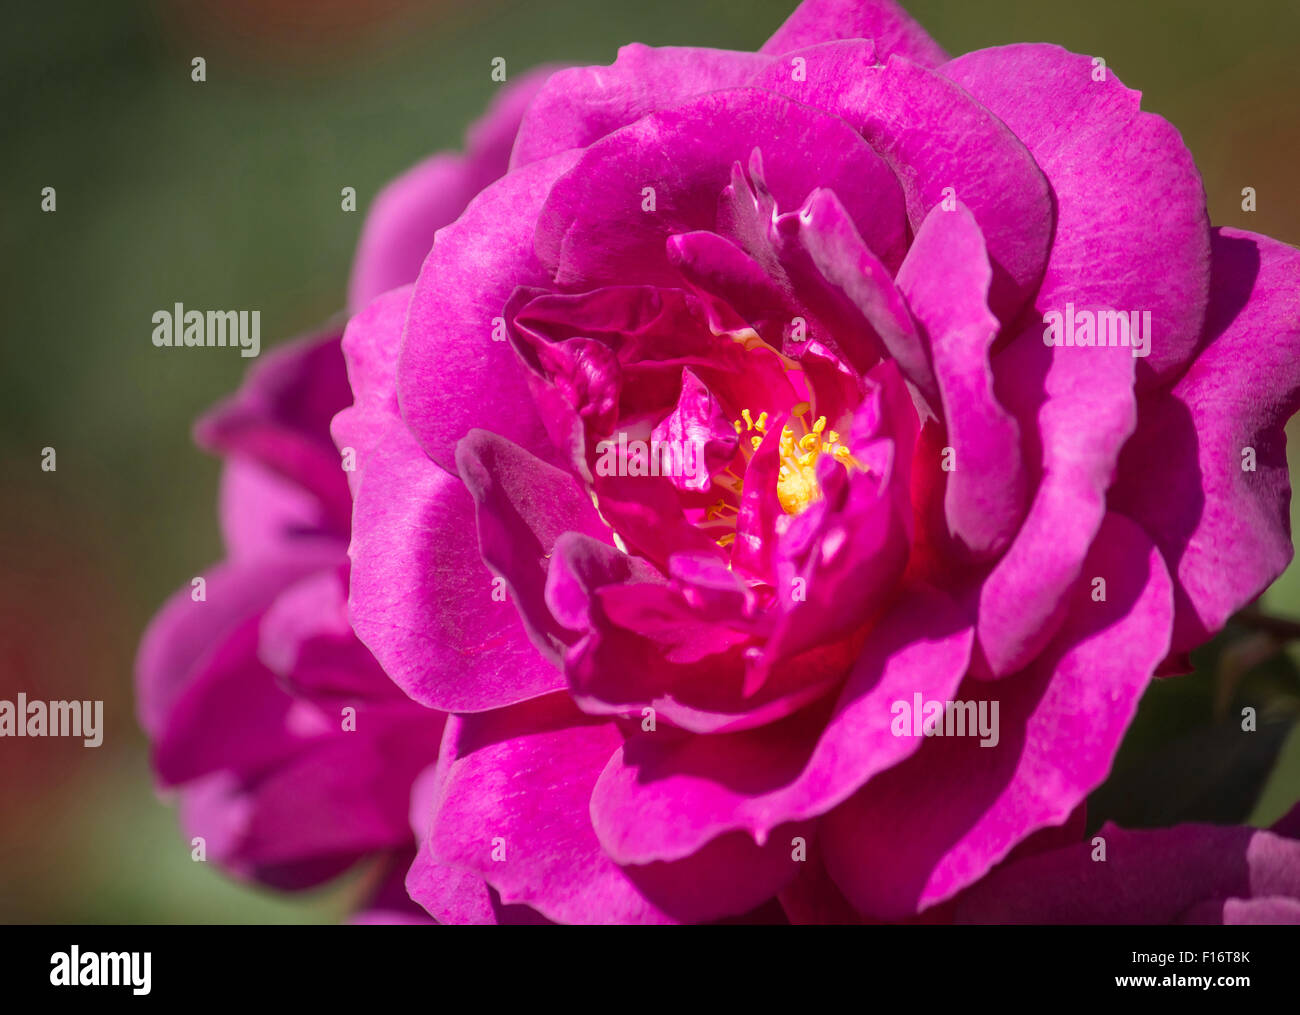 close up purple rose flower Stock Photo